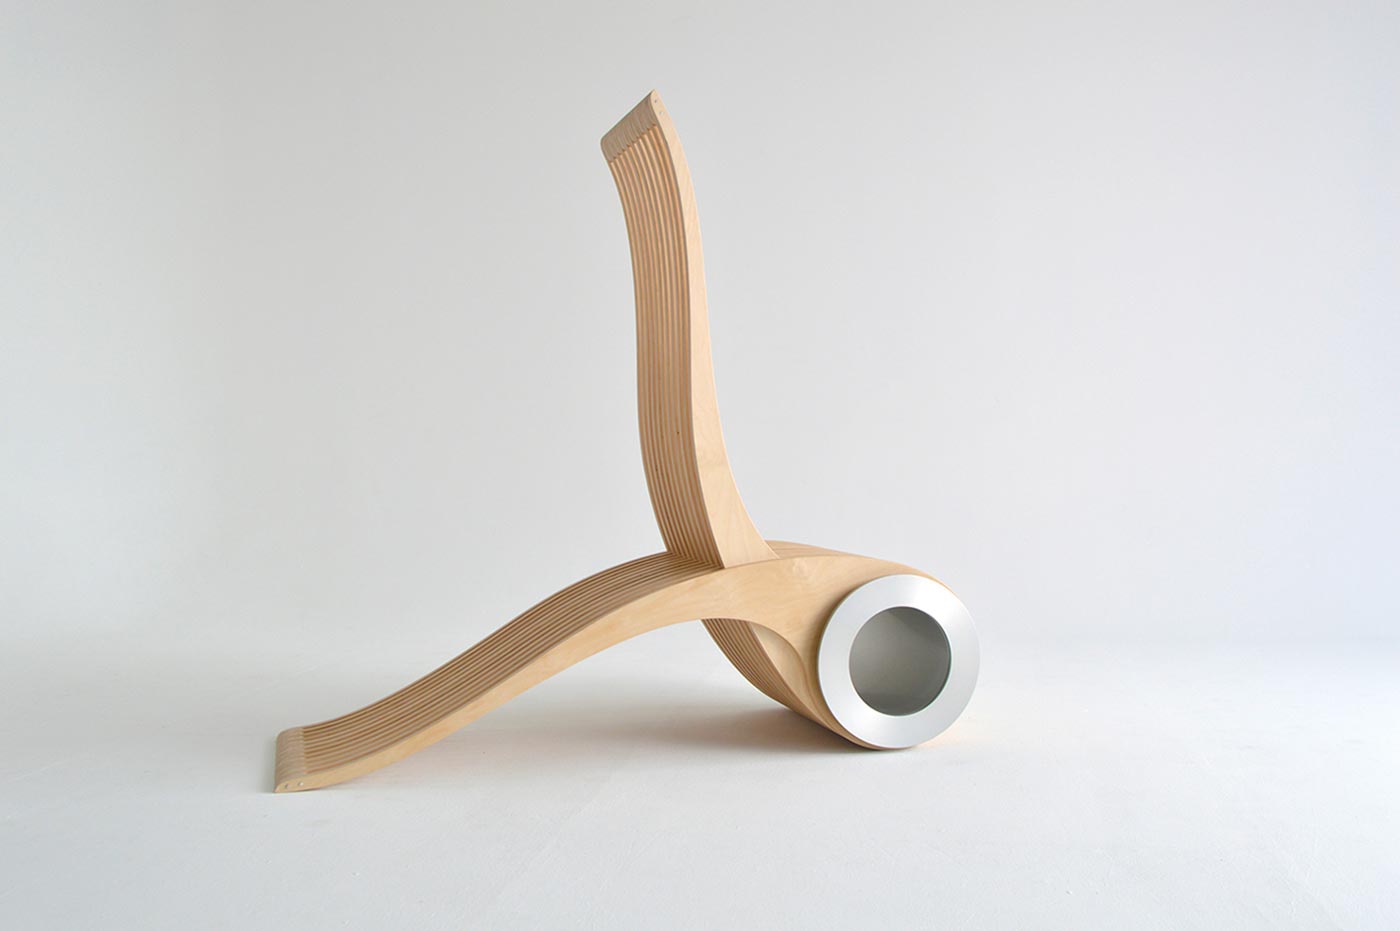 exocet-a-versatile-and-ergonomic-chair-by-designarium-2.jpg